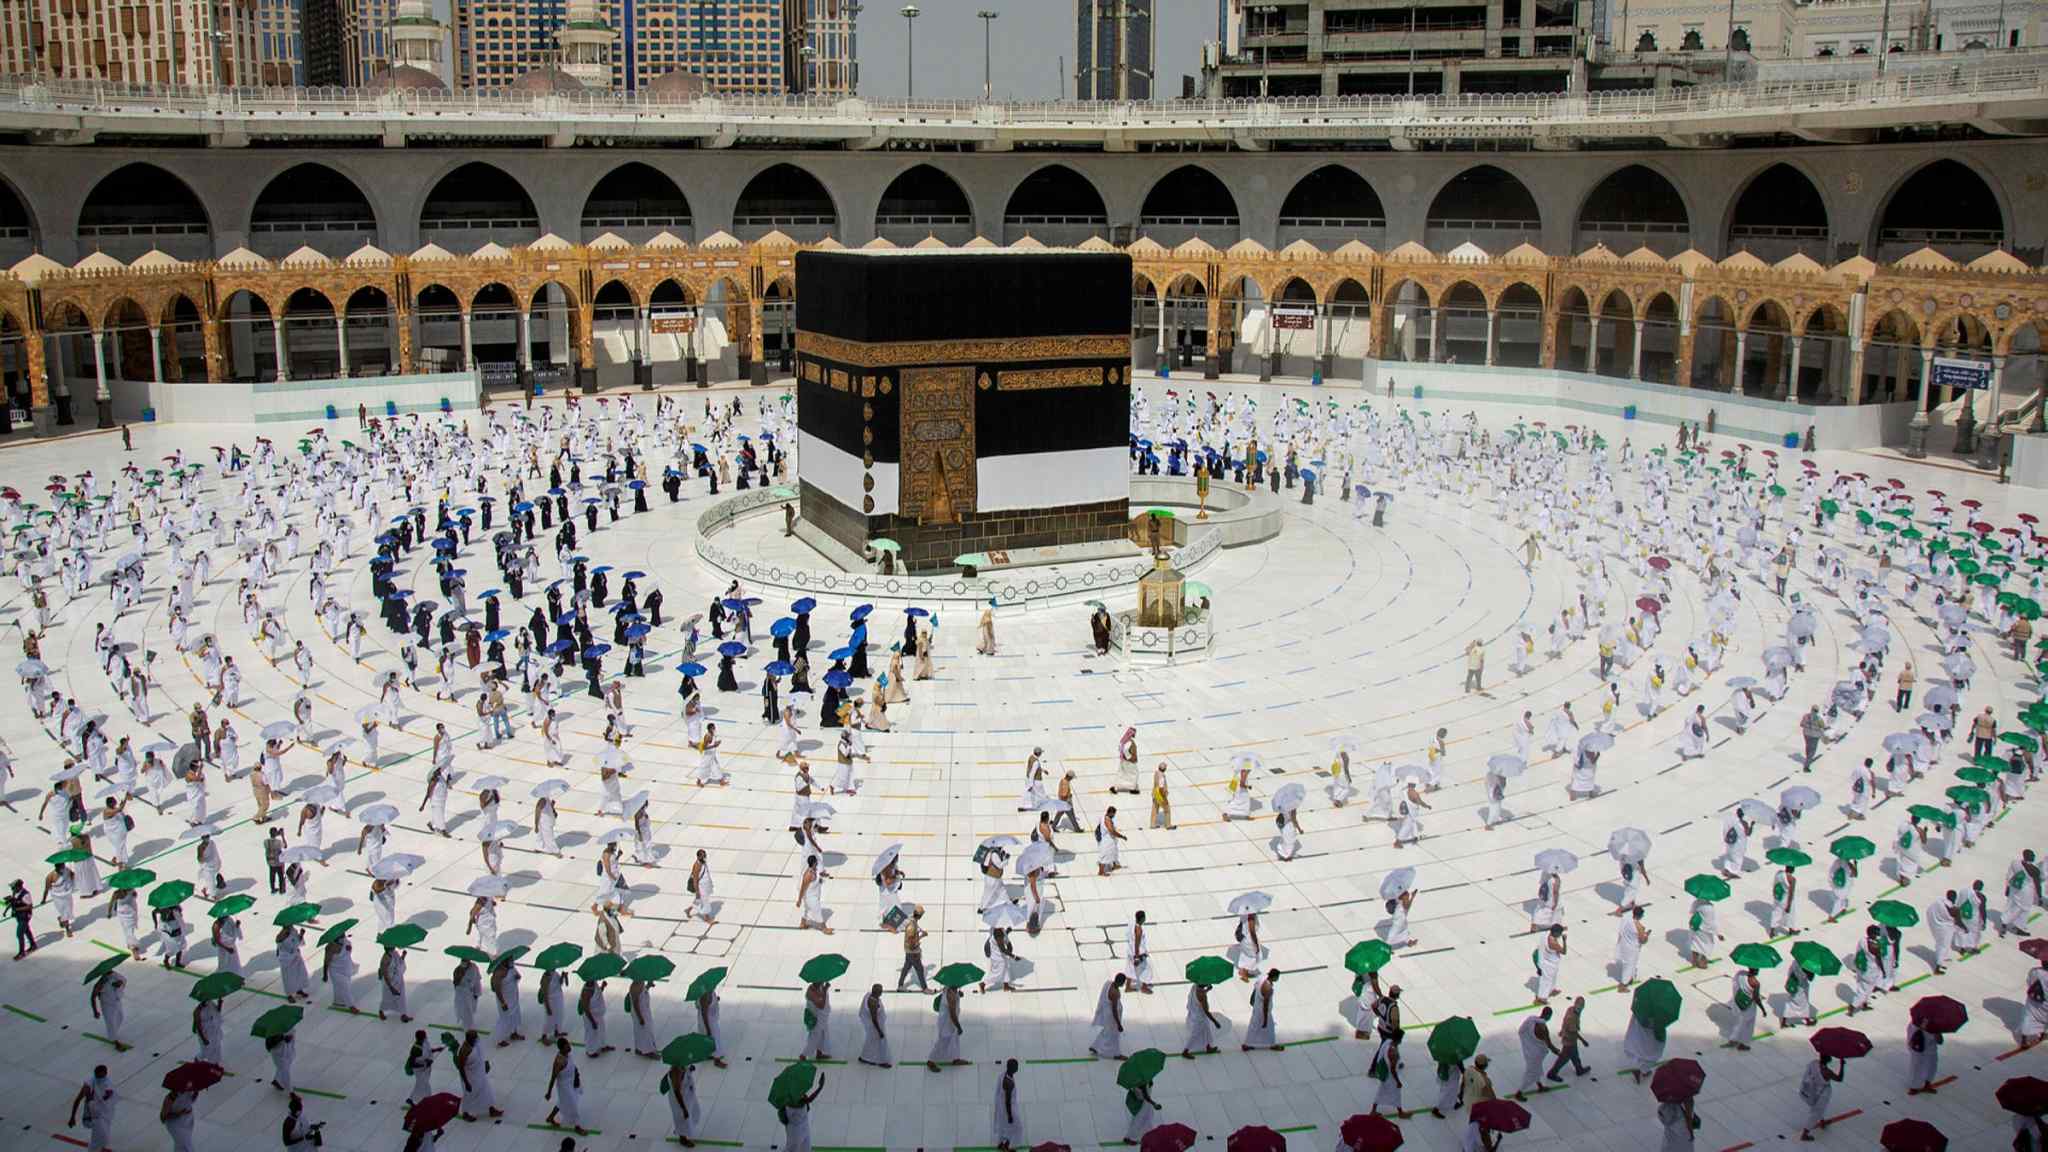 Hajj flights from Israel to Saudi Arabia included in talks to improve ties